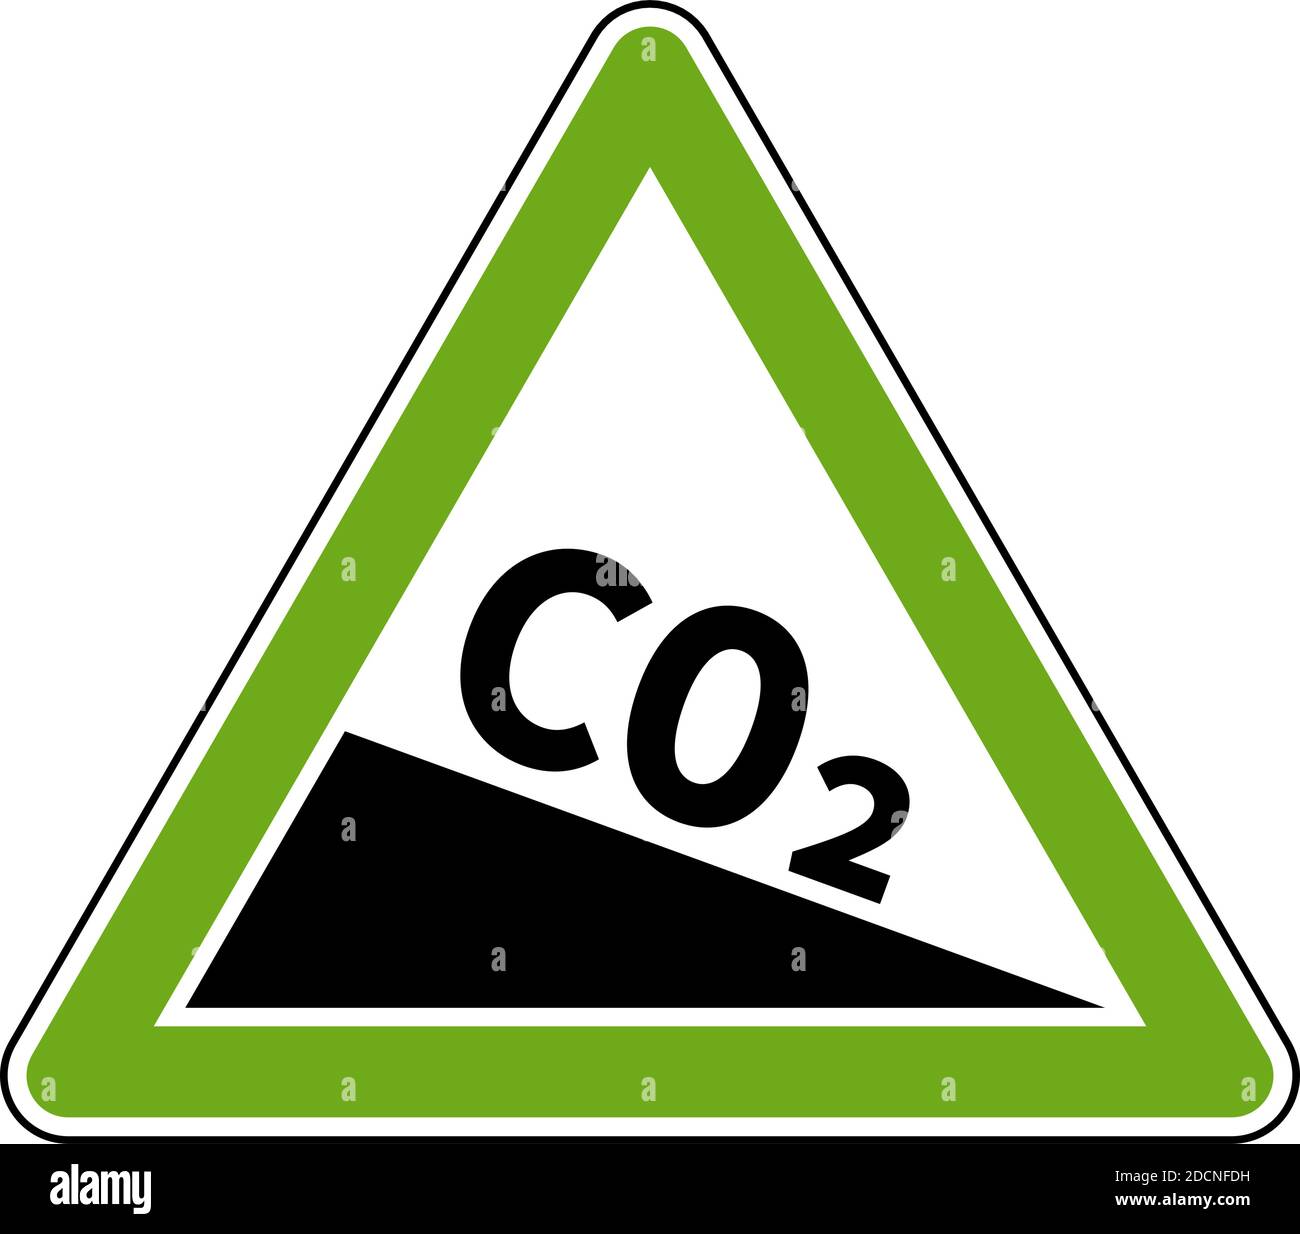 CO2 emission reduction sign green triangular shape vector illustration Stock Vector